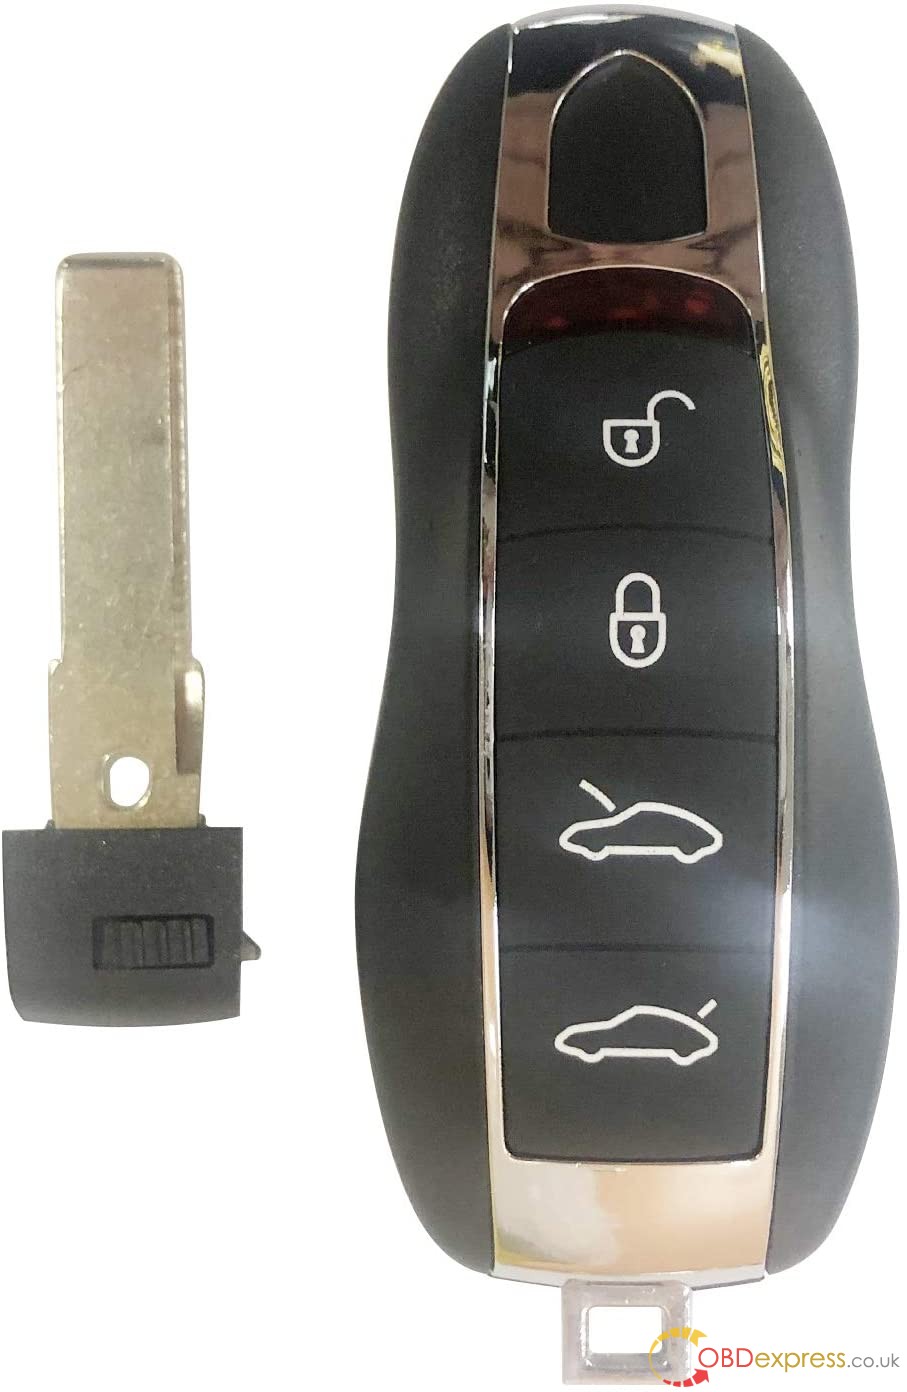 Porsche Cayenne 2016 smart key